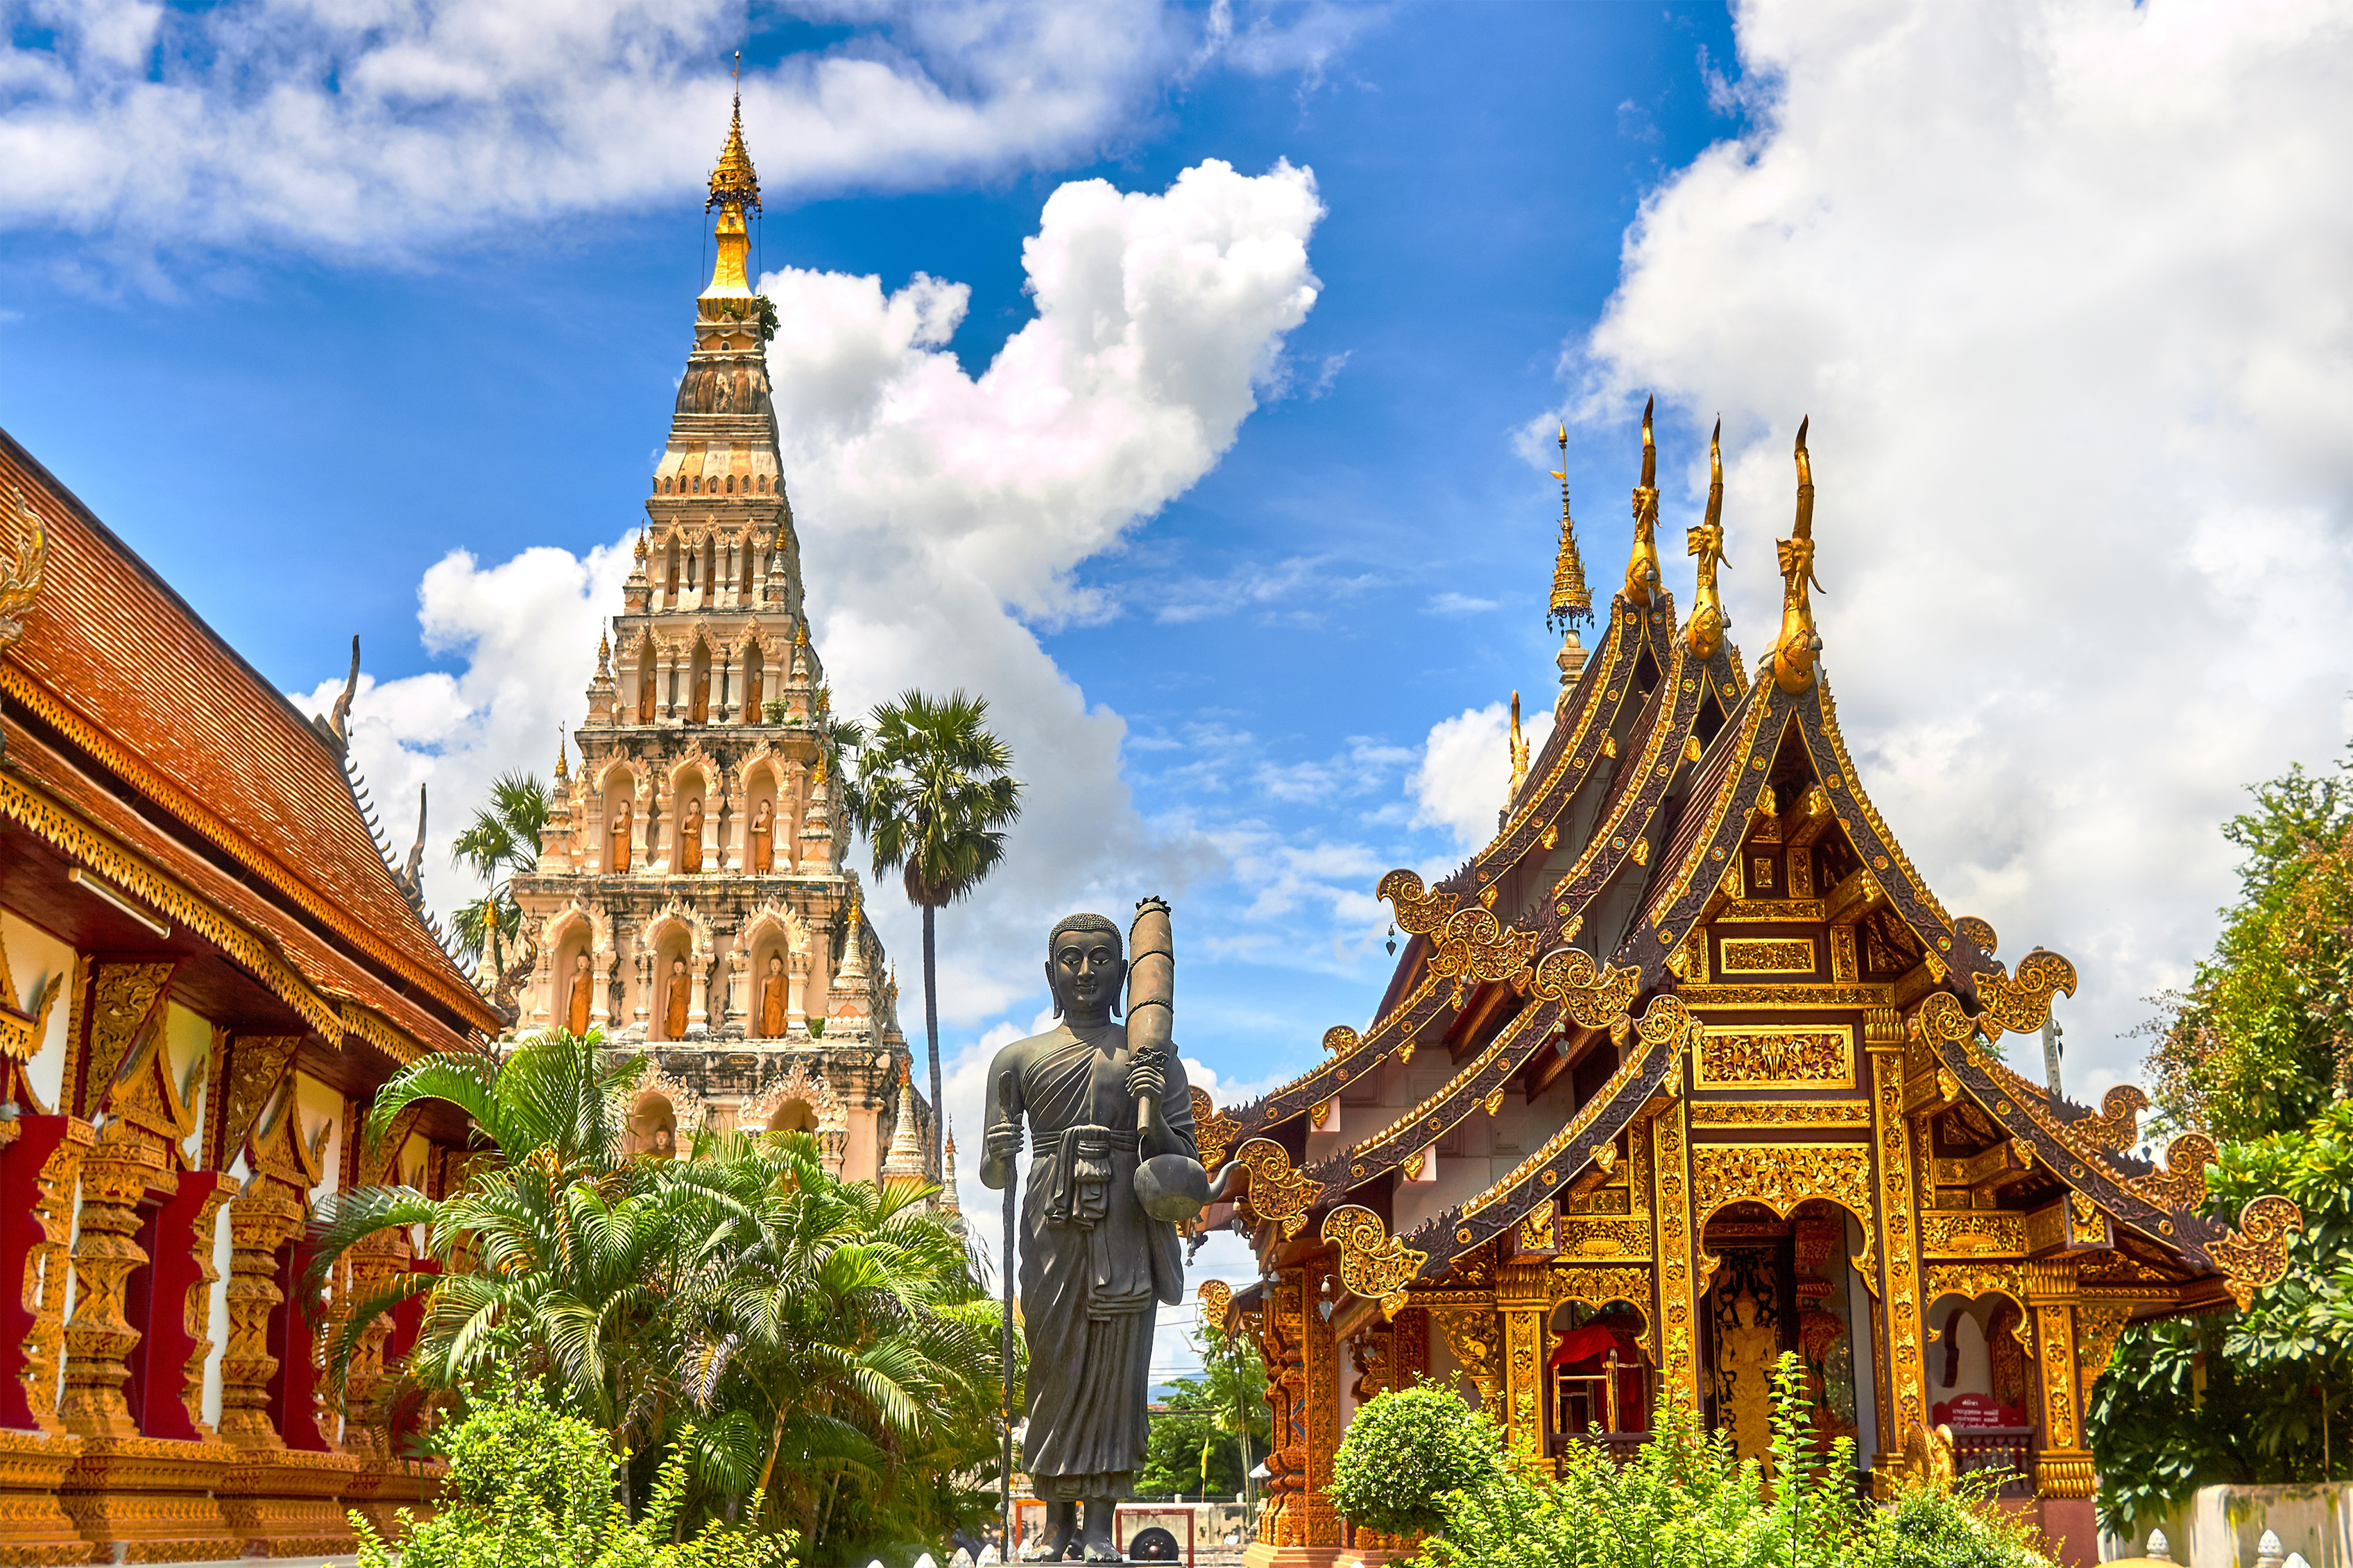 Tour du lịch Pattaya của Sunvina Travel 2022/2023 113274